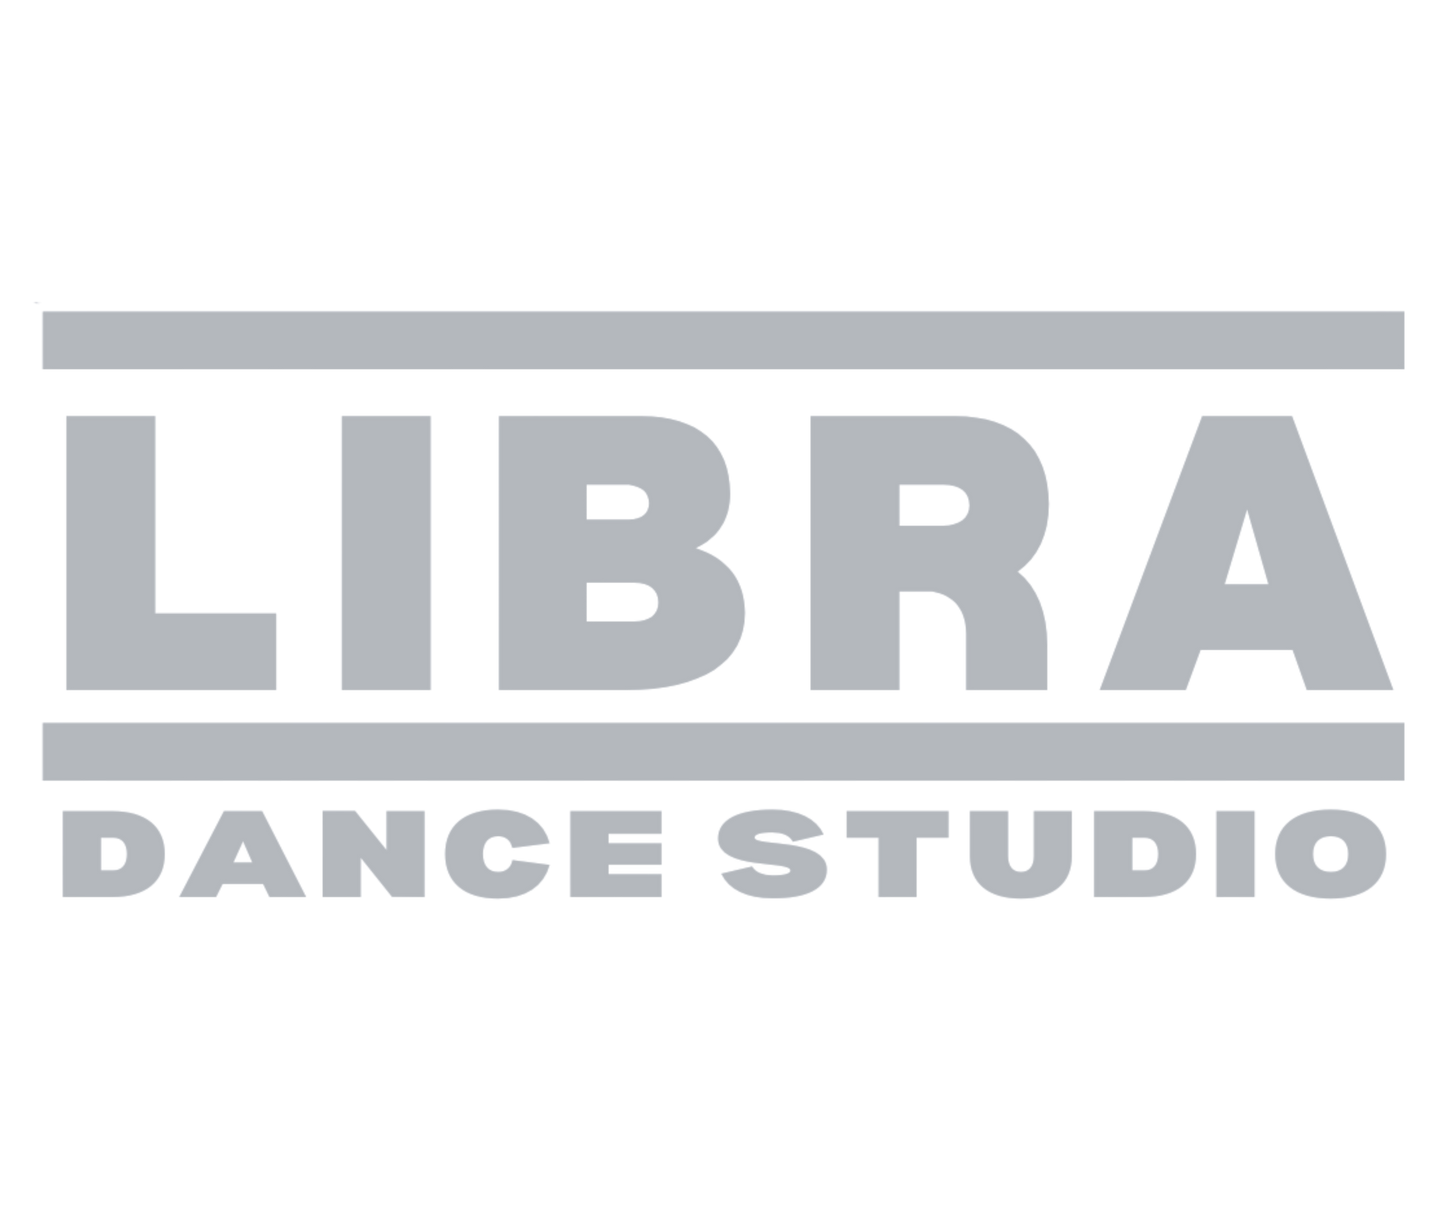 Libra Dance Studio